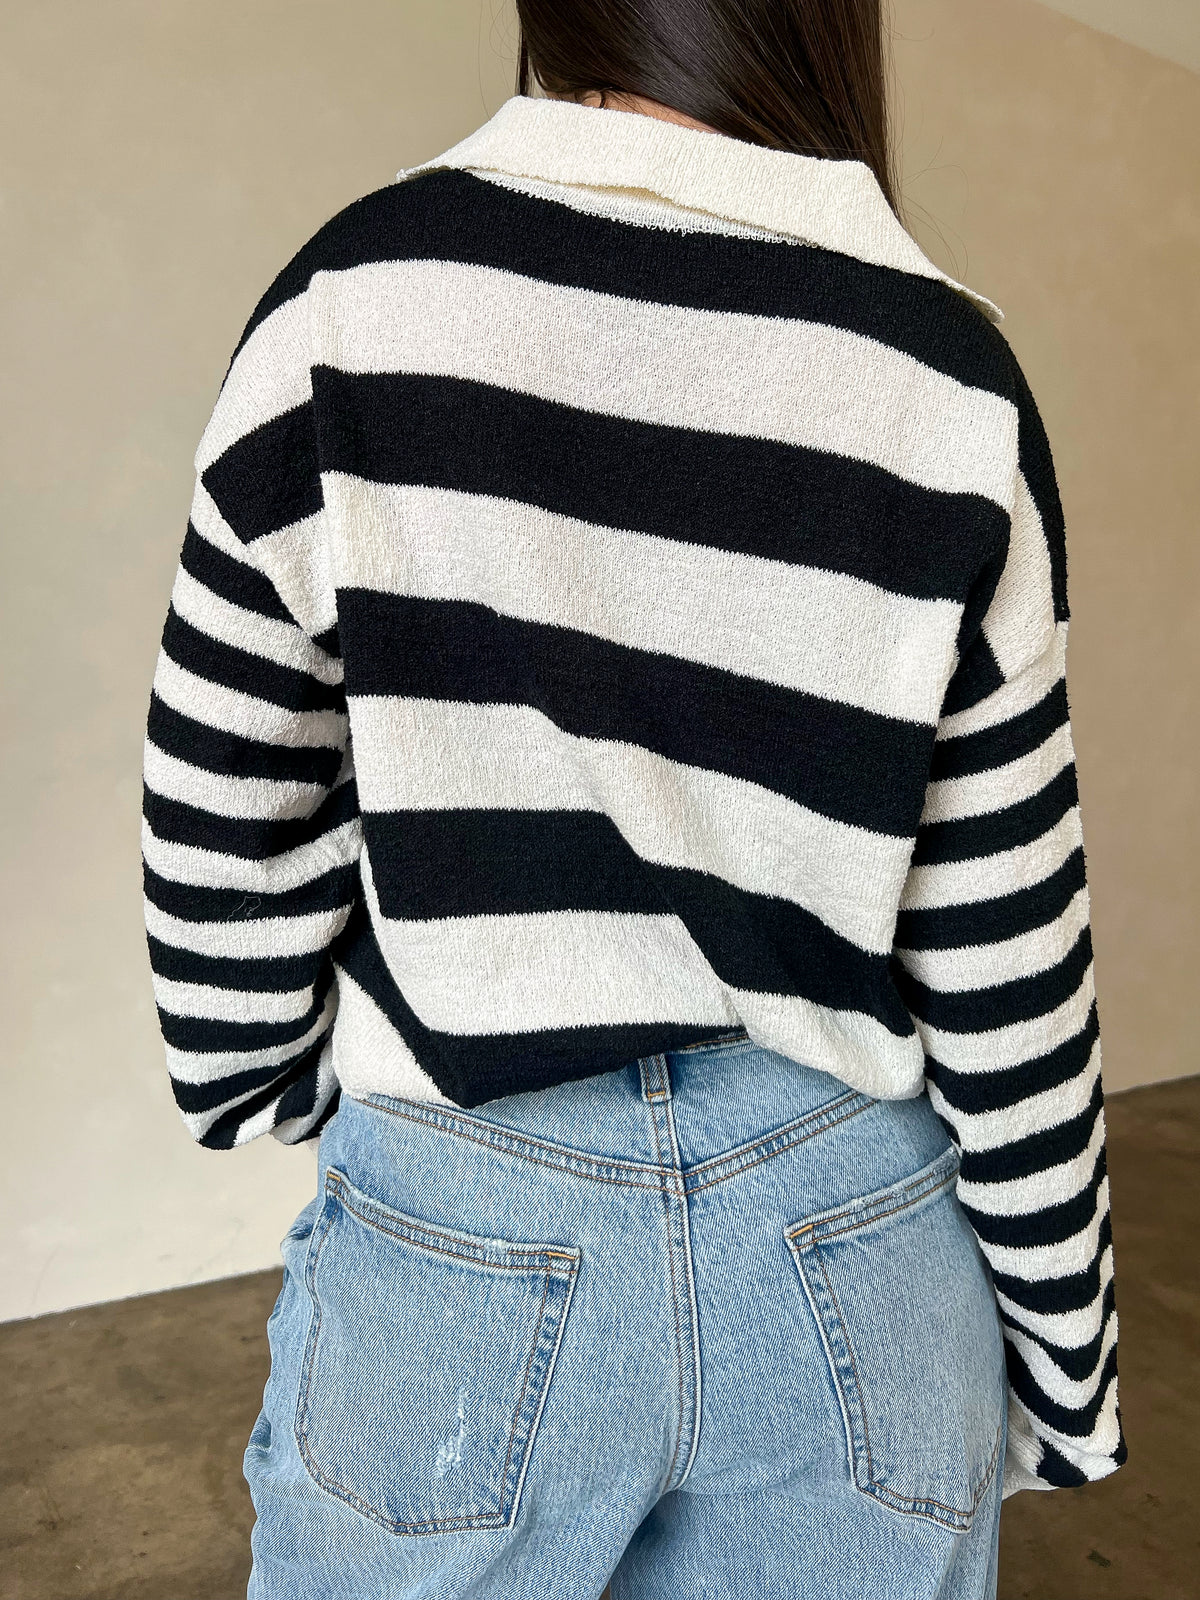 Celina Stripped Sweater (Black/Cream)